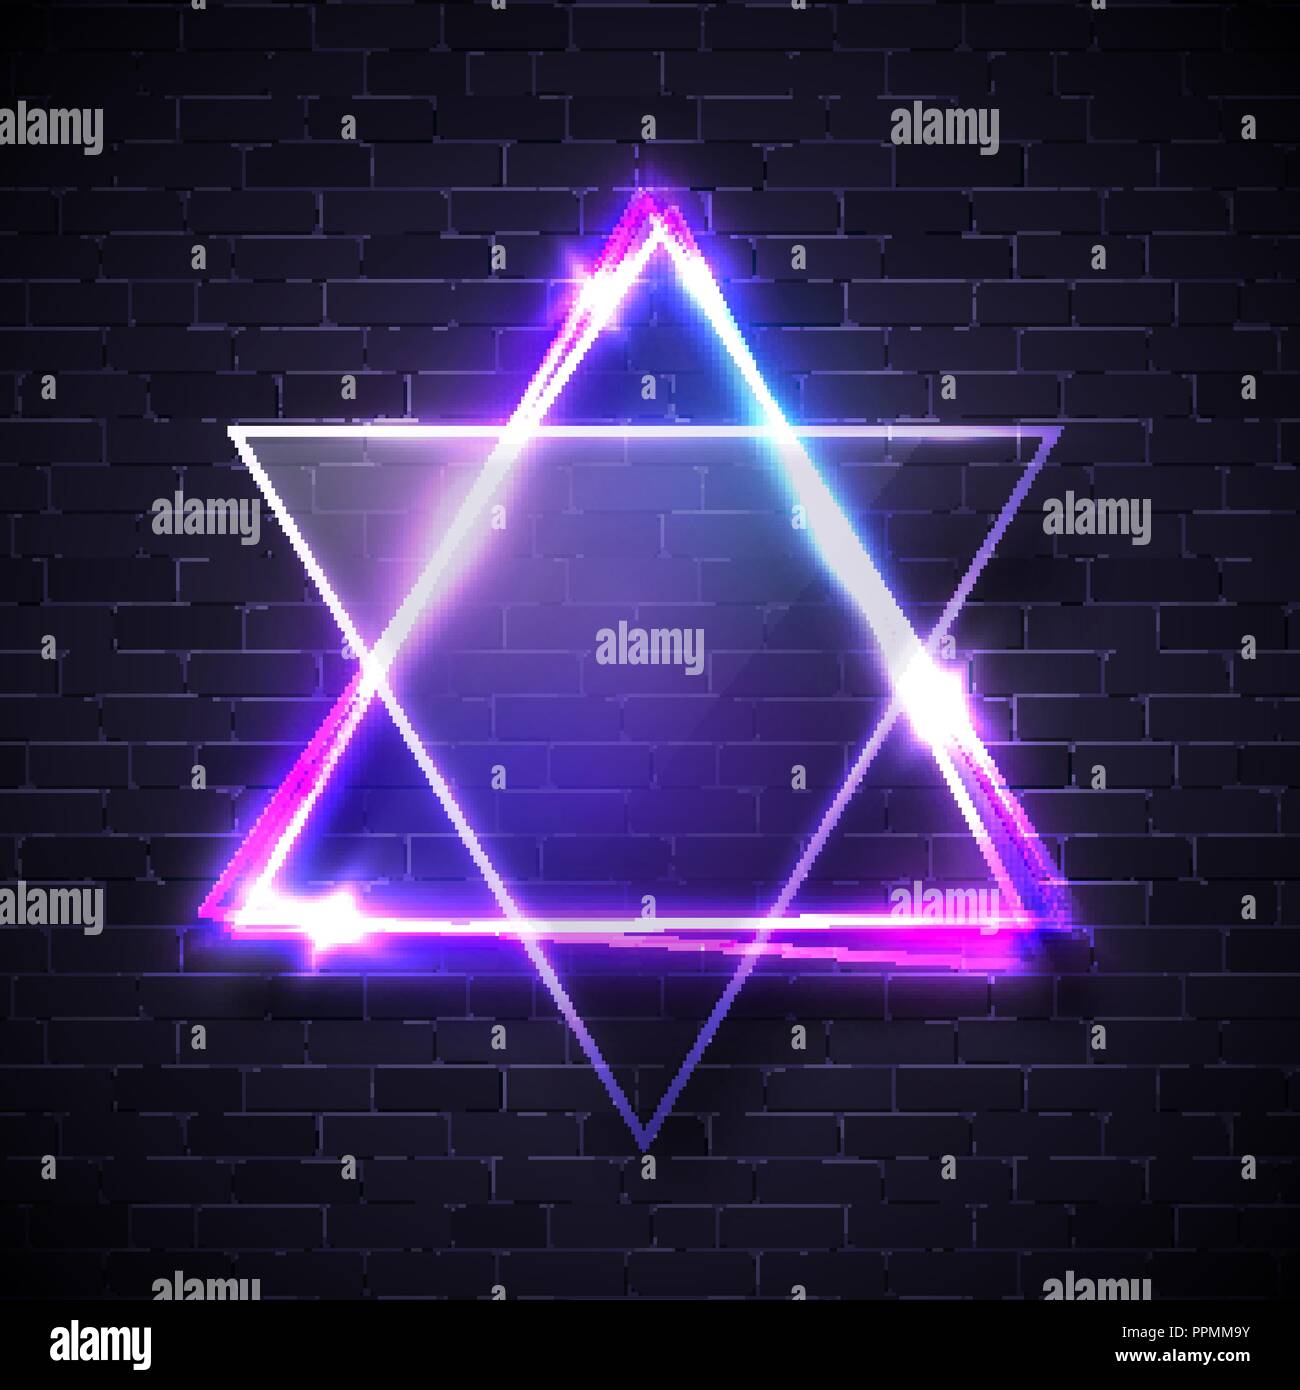 Hebrew biblical Judaism symbol. Israel star. Jewish David star design on blue brick background. Neon glowing geometric triangle shape frame. Glowing abstract backdrop. Bright vector illustration. Stock Vector